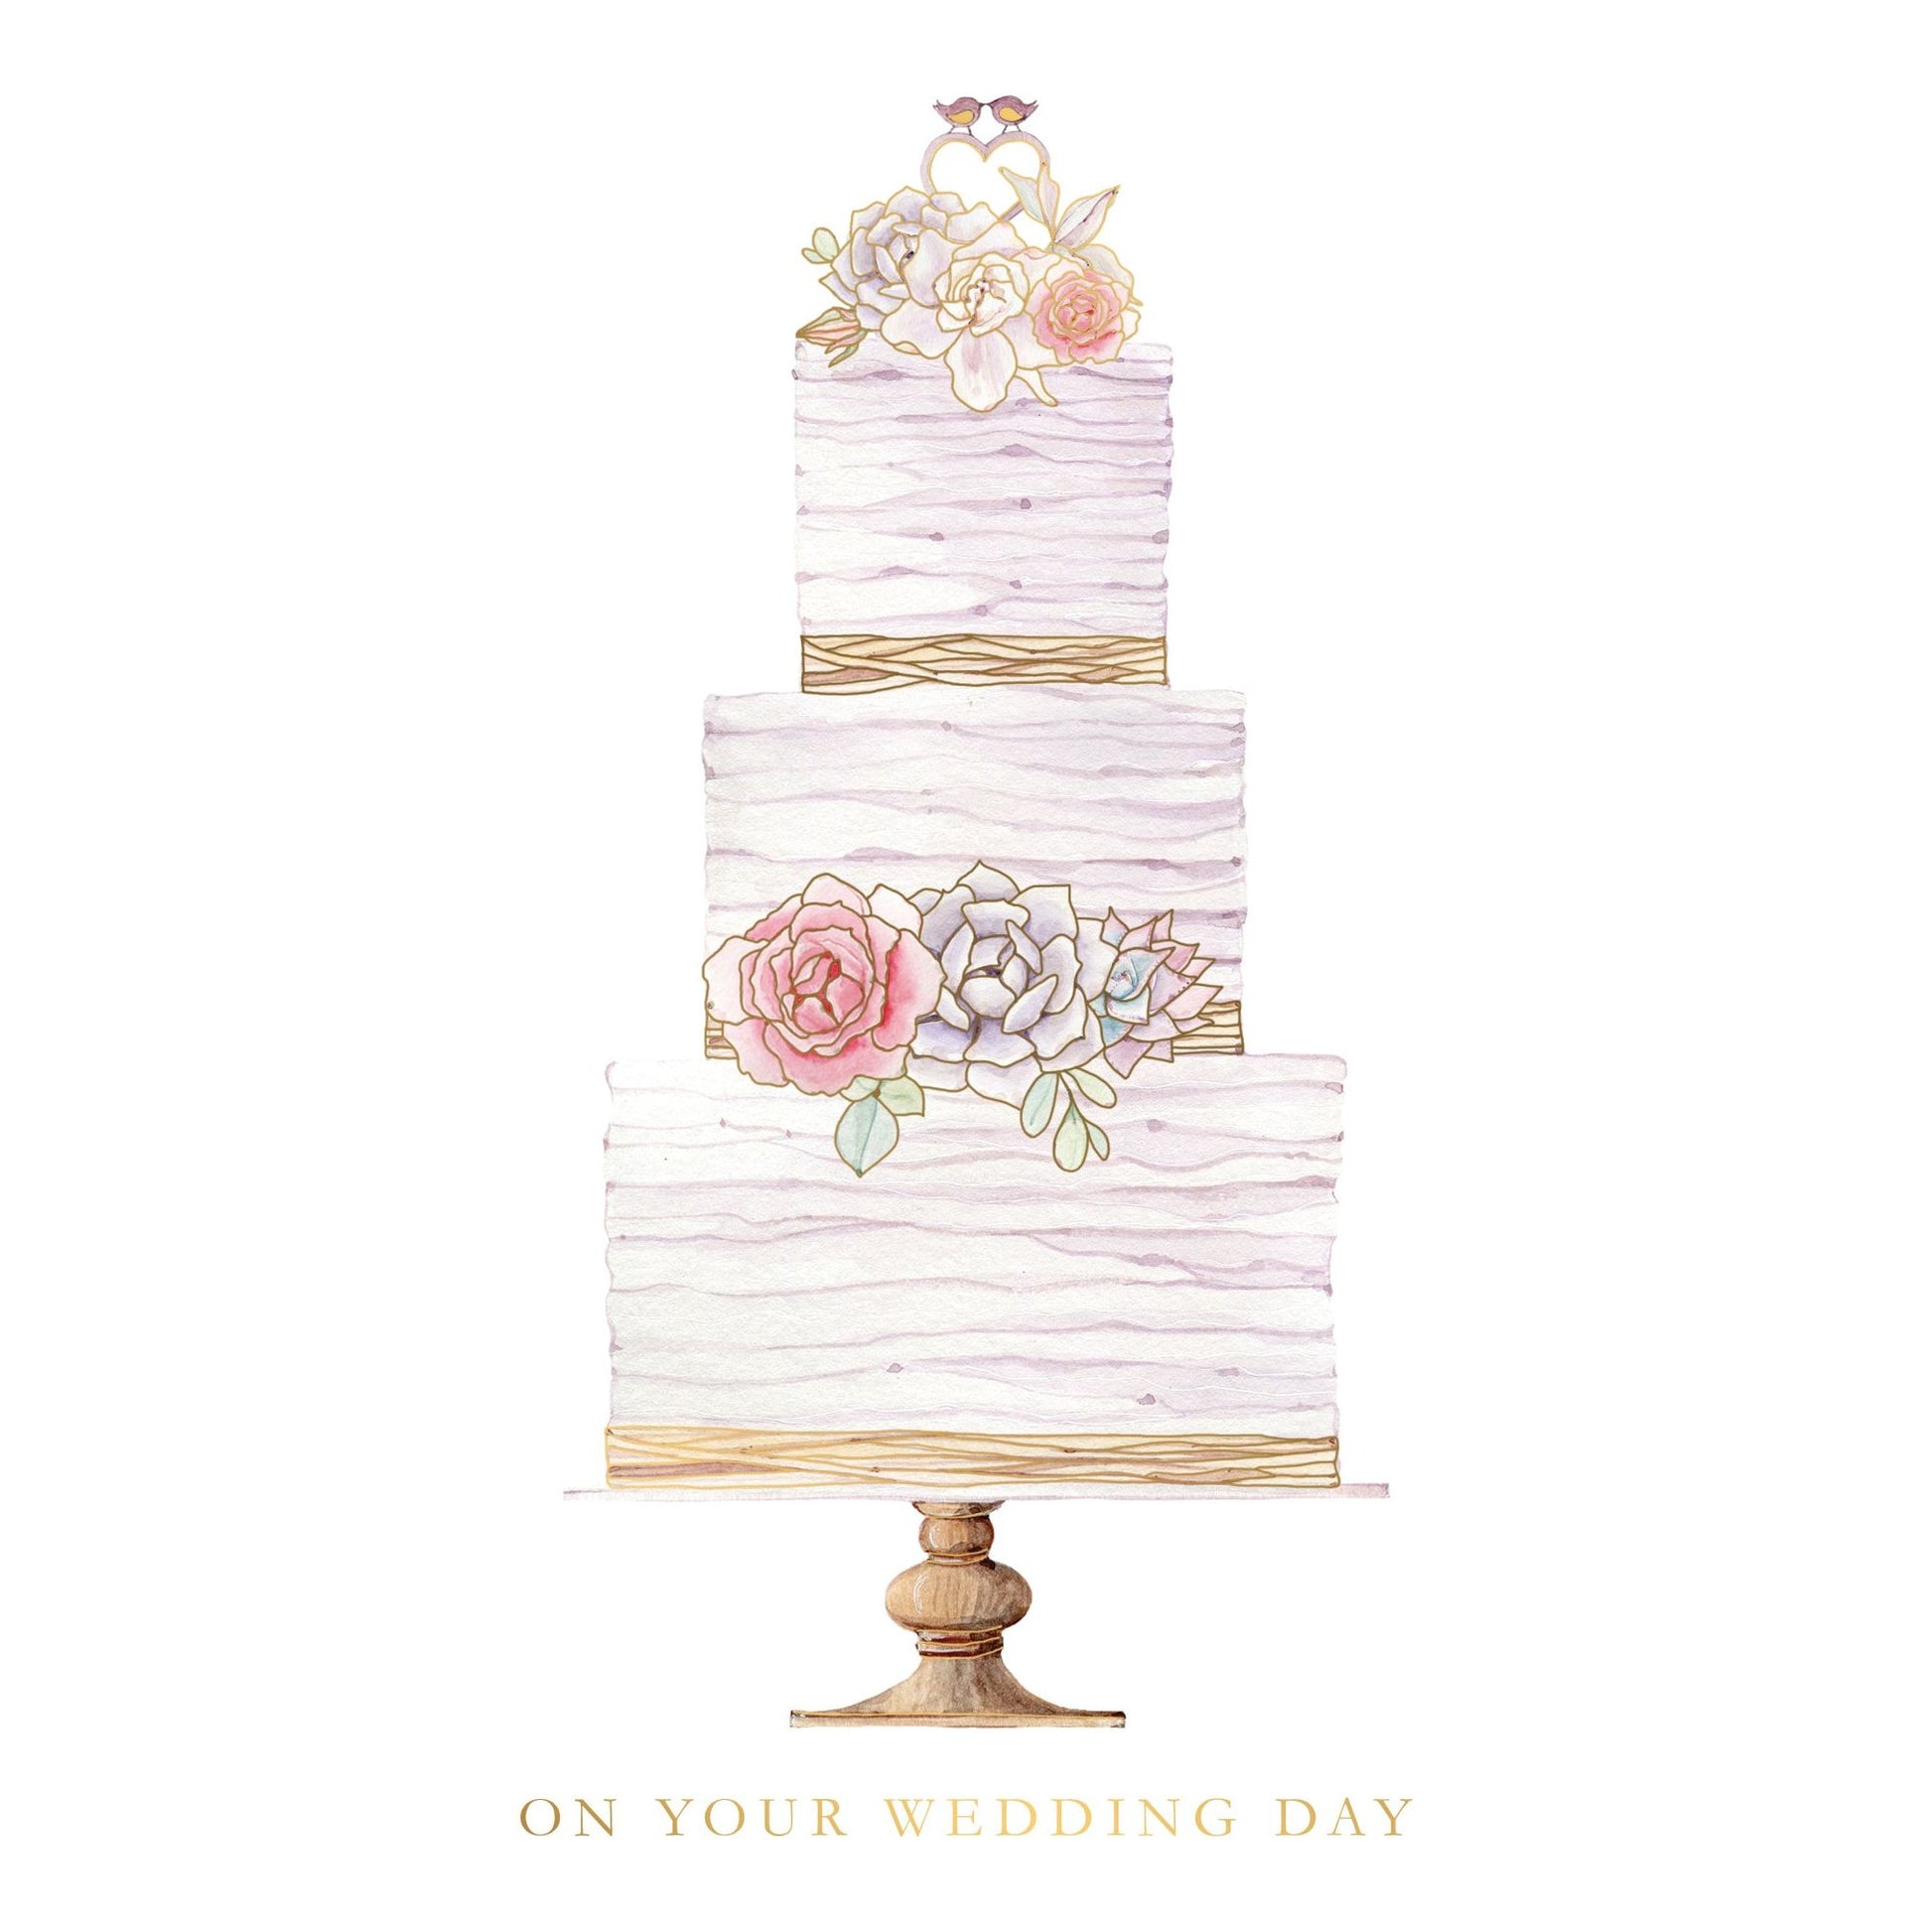 Rustic Wedding Cake Wedding Card - Cardmore